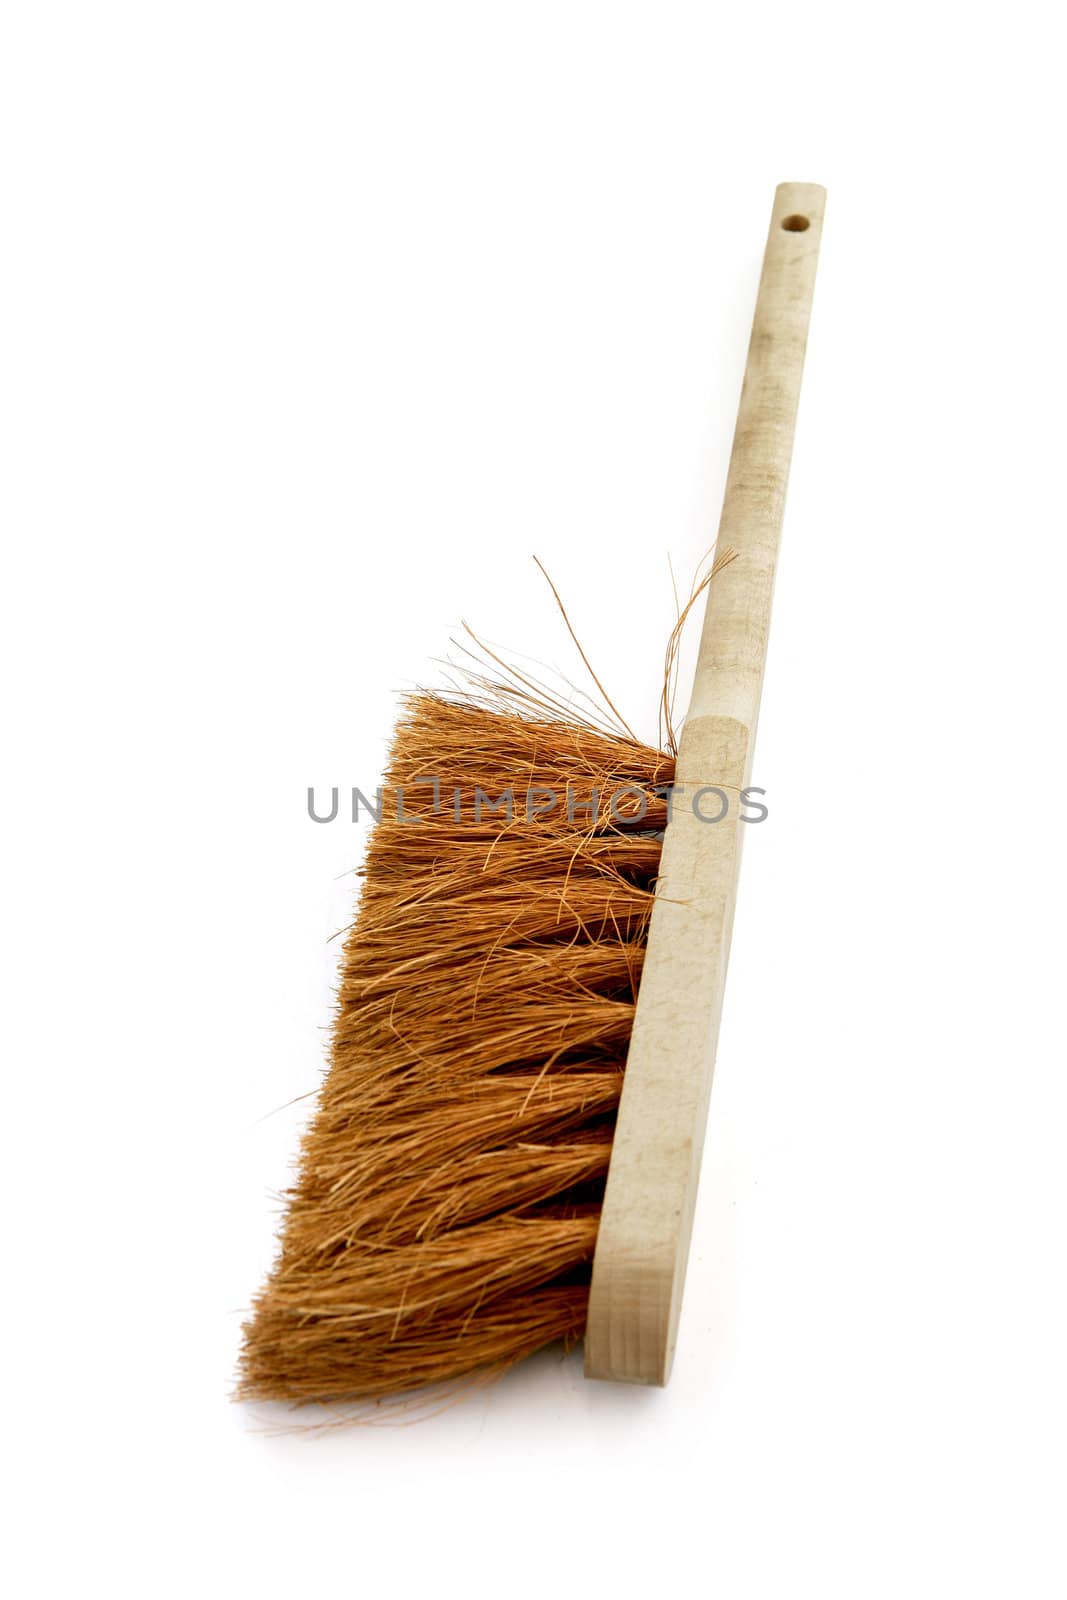 Dustpan brush by phovoir